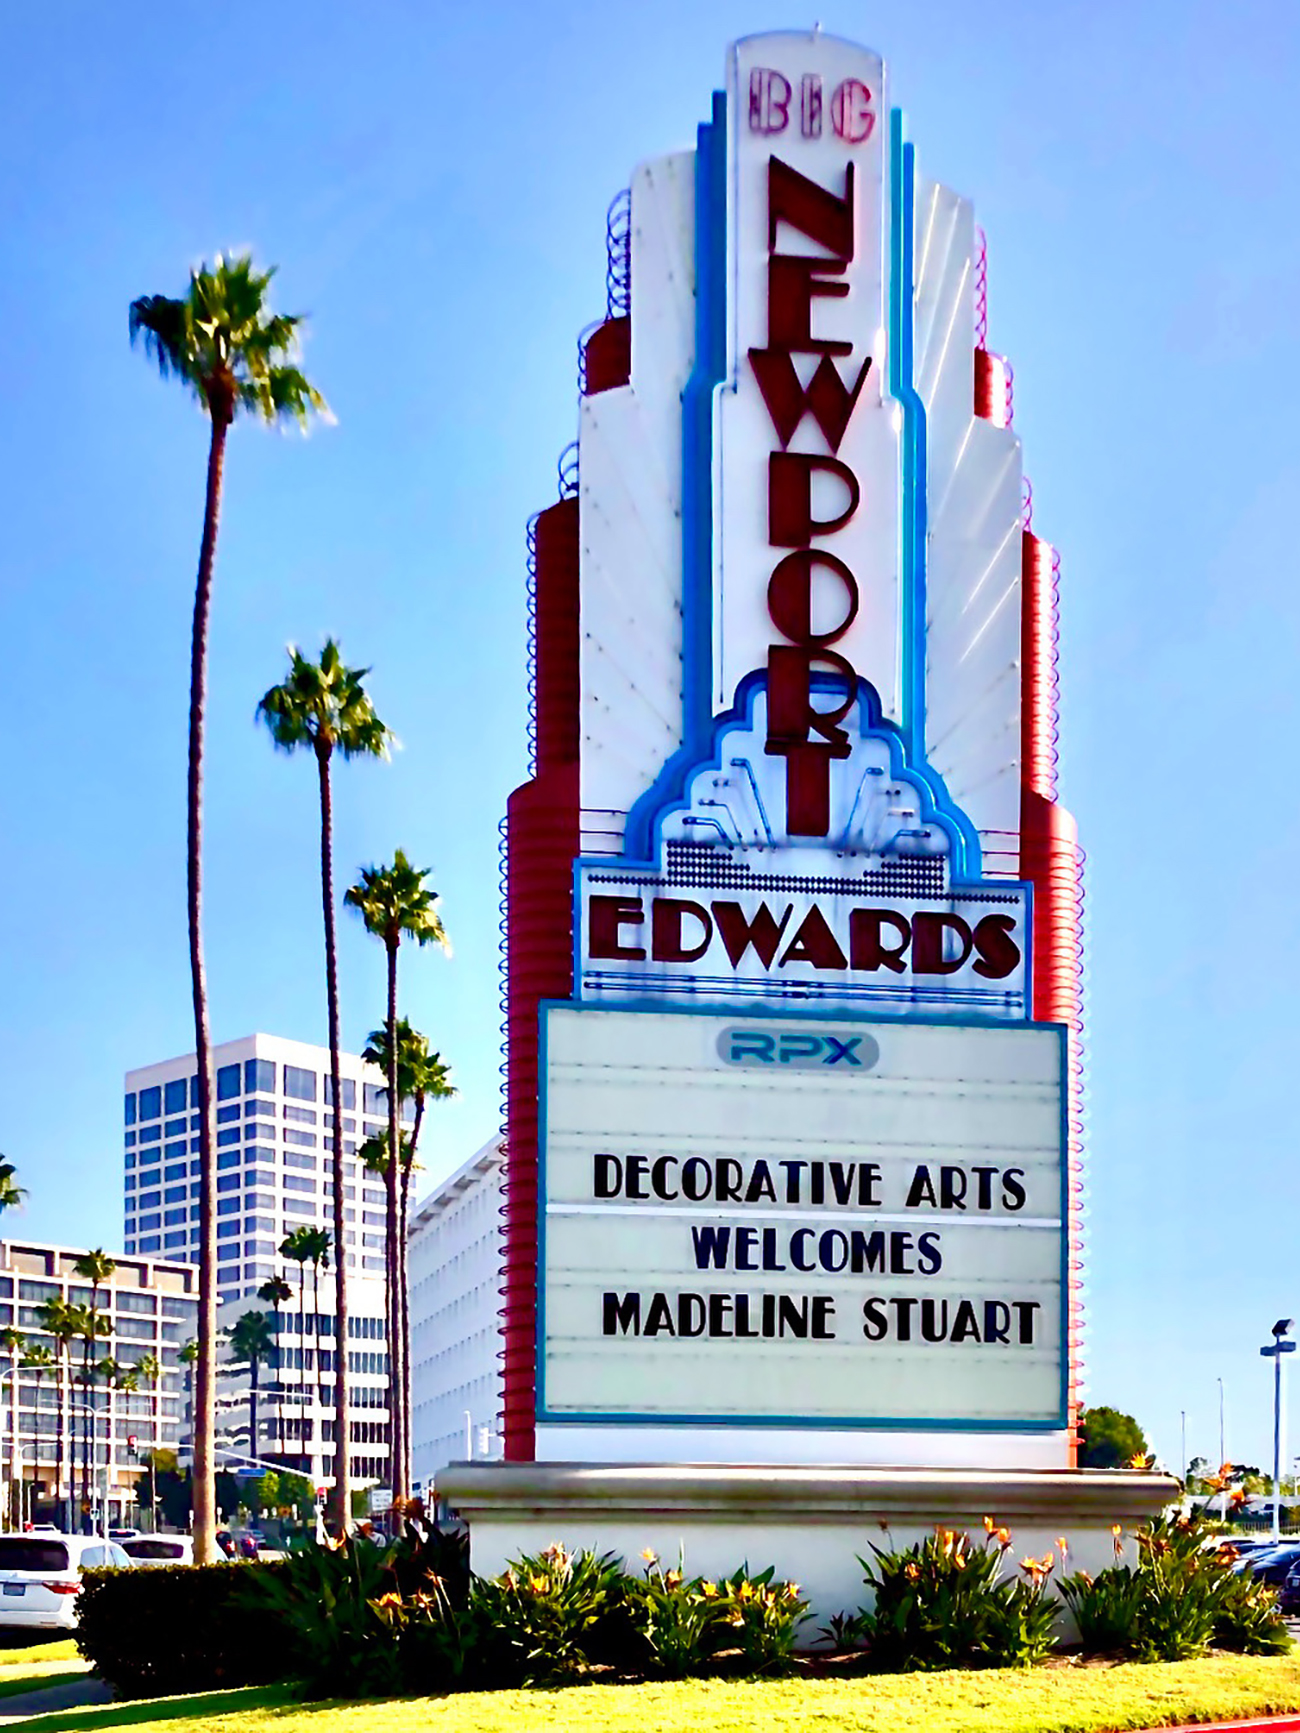 Decorative Arts Society in Newport Beach